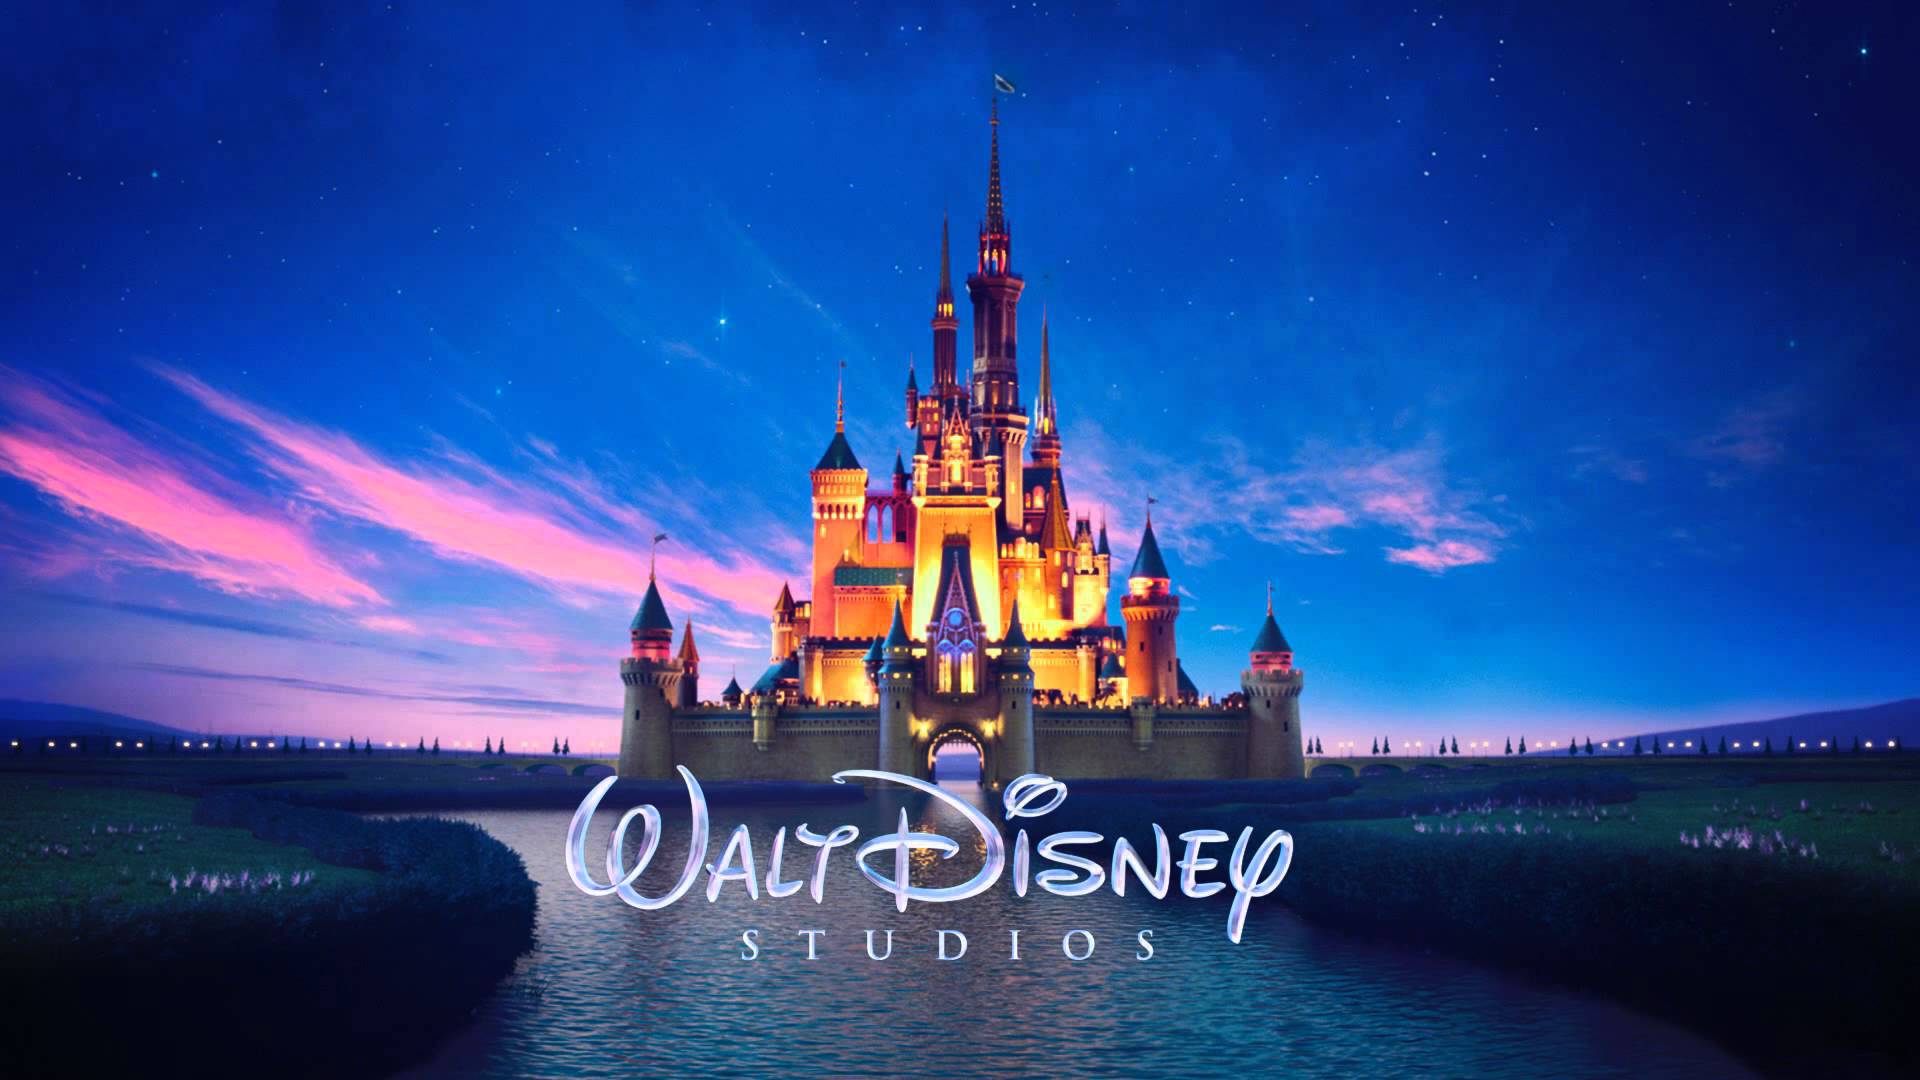 Disney Movie 2017 Logo - Disney Movies Launching in 2018 - n3rdabl3